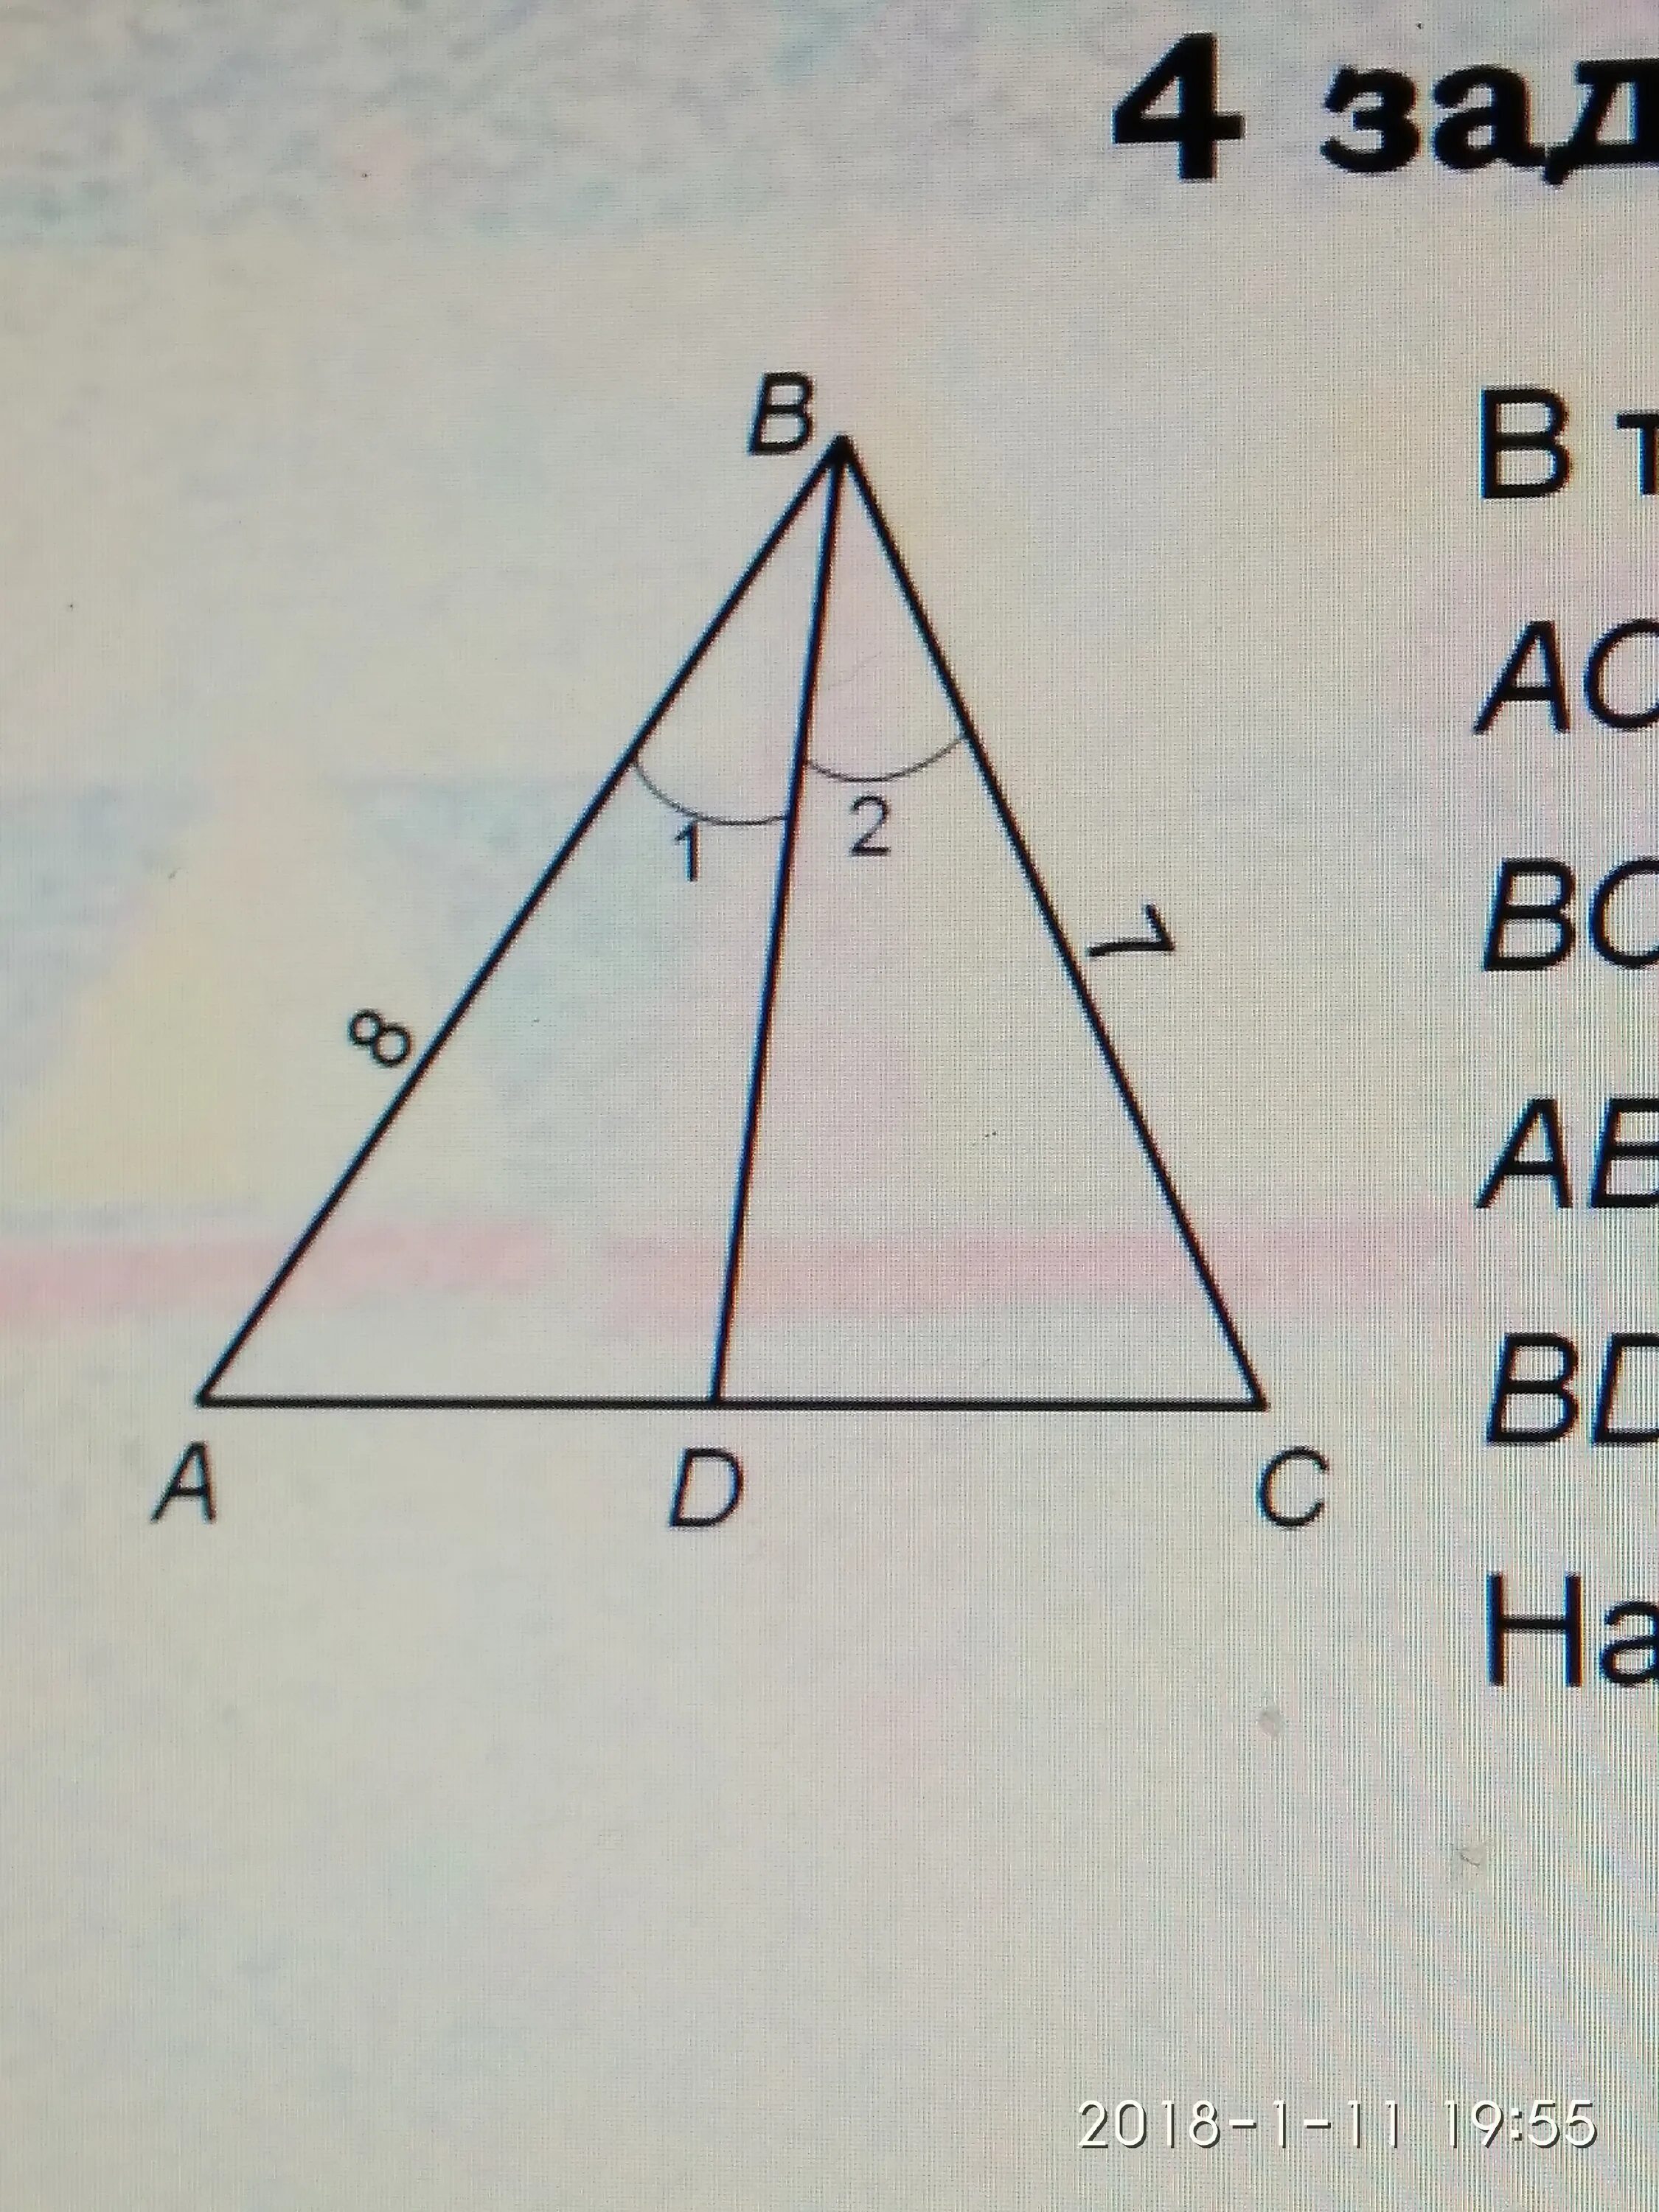 АС = АВ + вс. Треугольник АВС. Треугольник АБС. В треугольнике АВС, АС = вс,. В треугольнике абс аб 6 ас 8